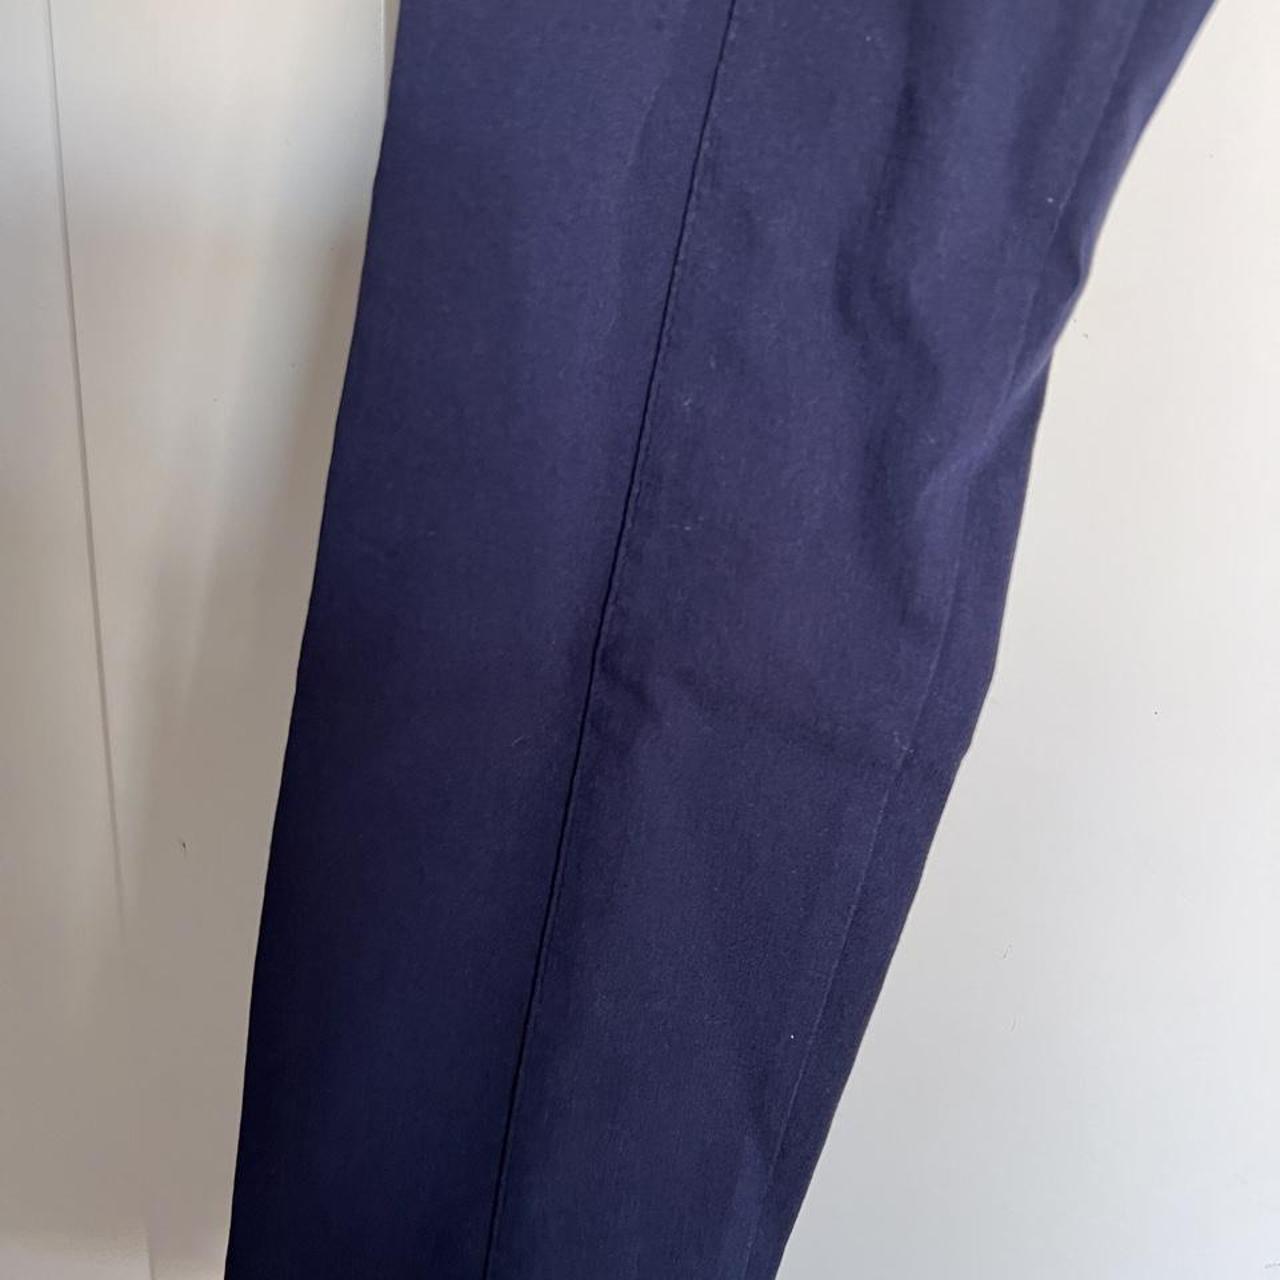 Primark | Pants | Primark Drawstring Sweatpants Size Medium Navy | Poshmark